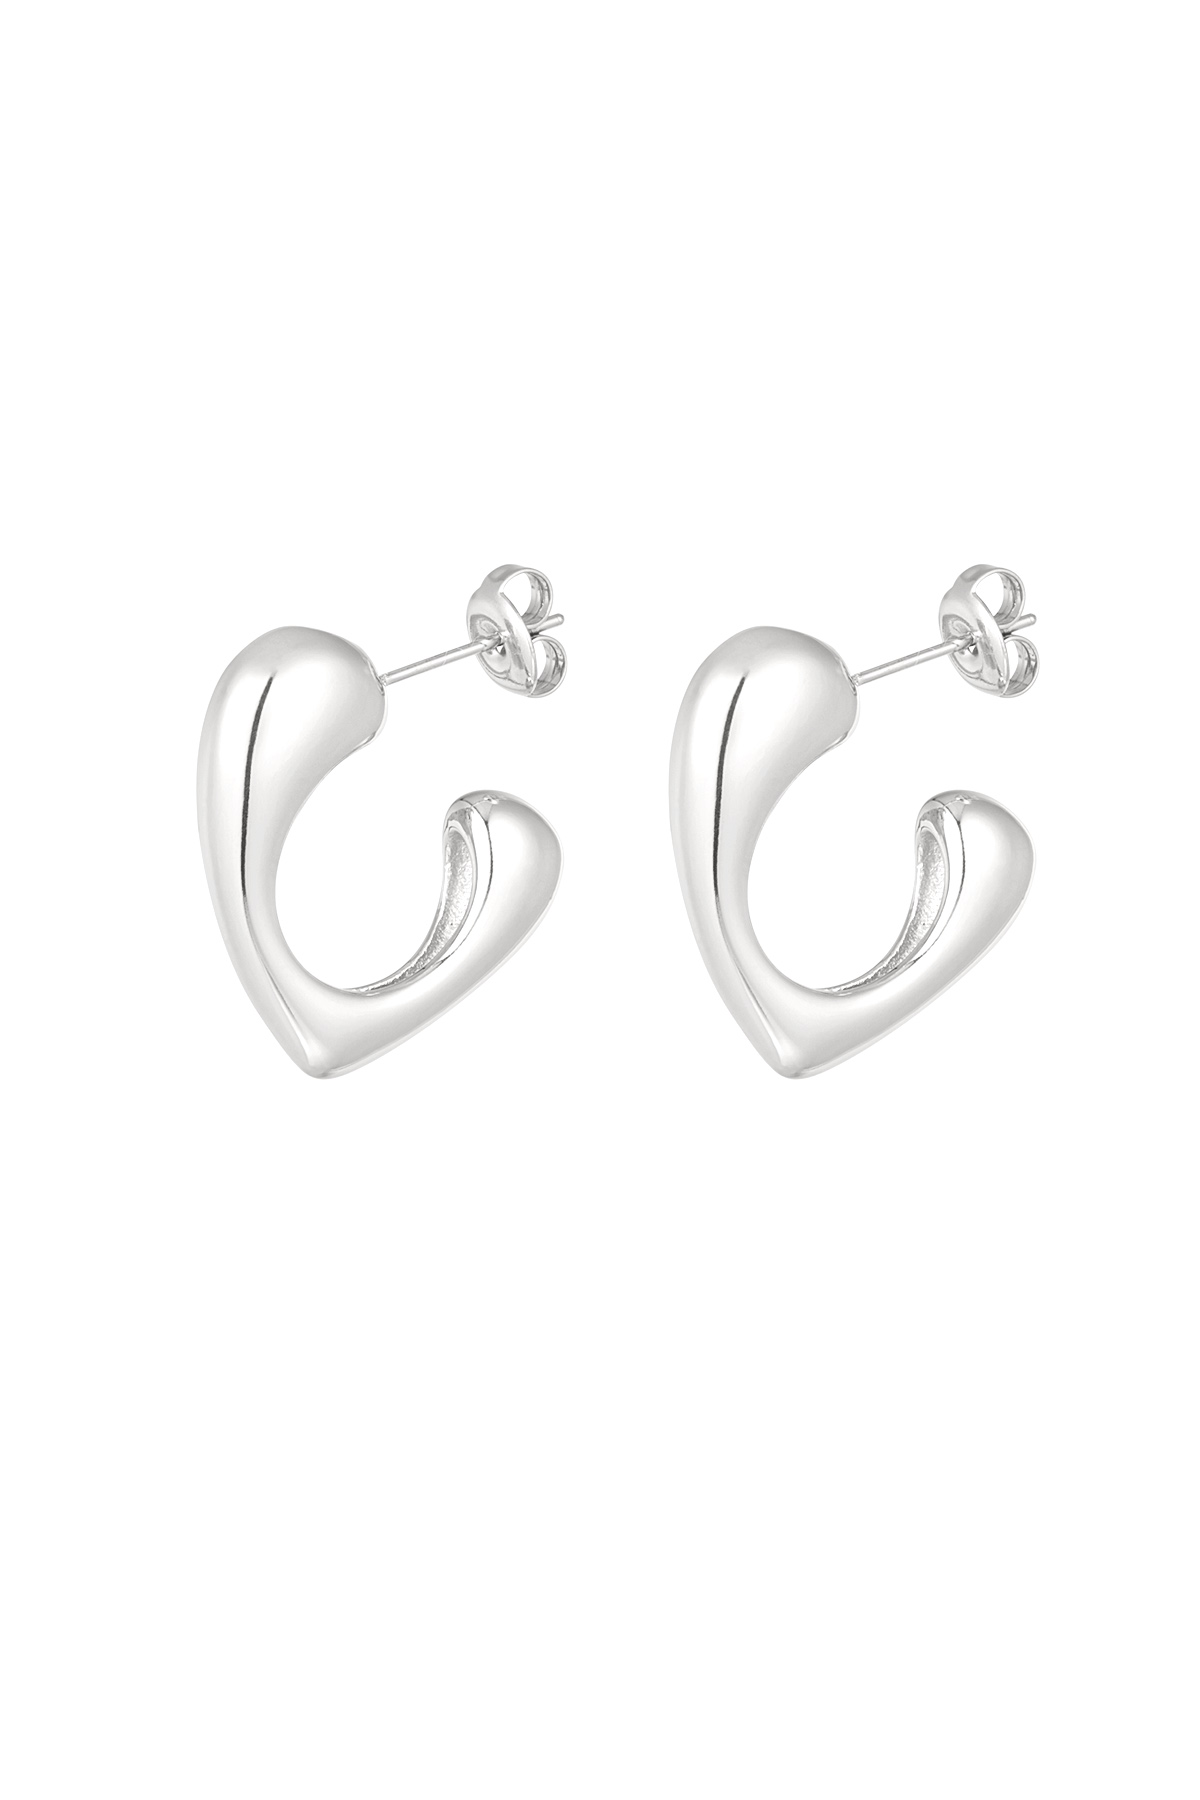 Klobige Ohrringe – Silber h5 